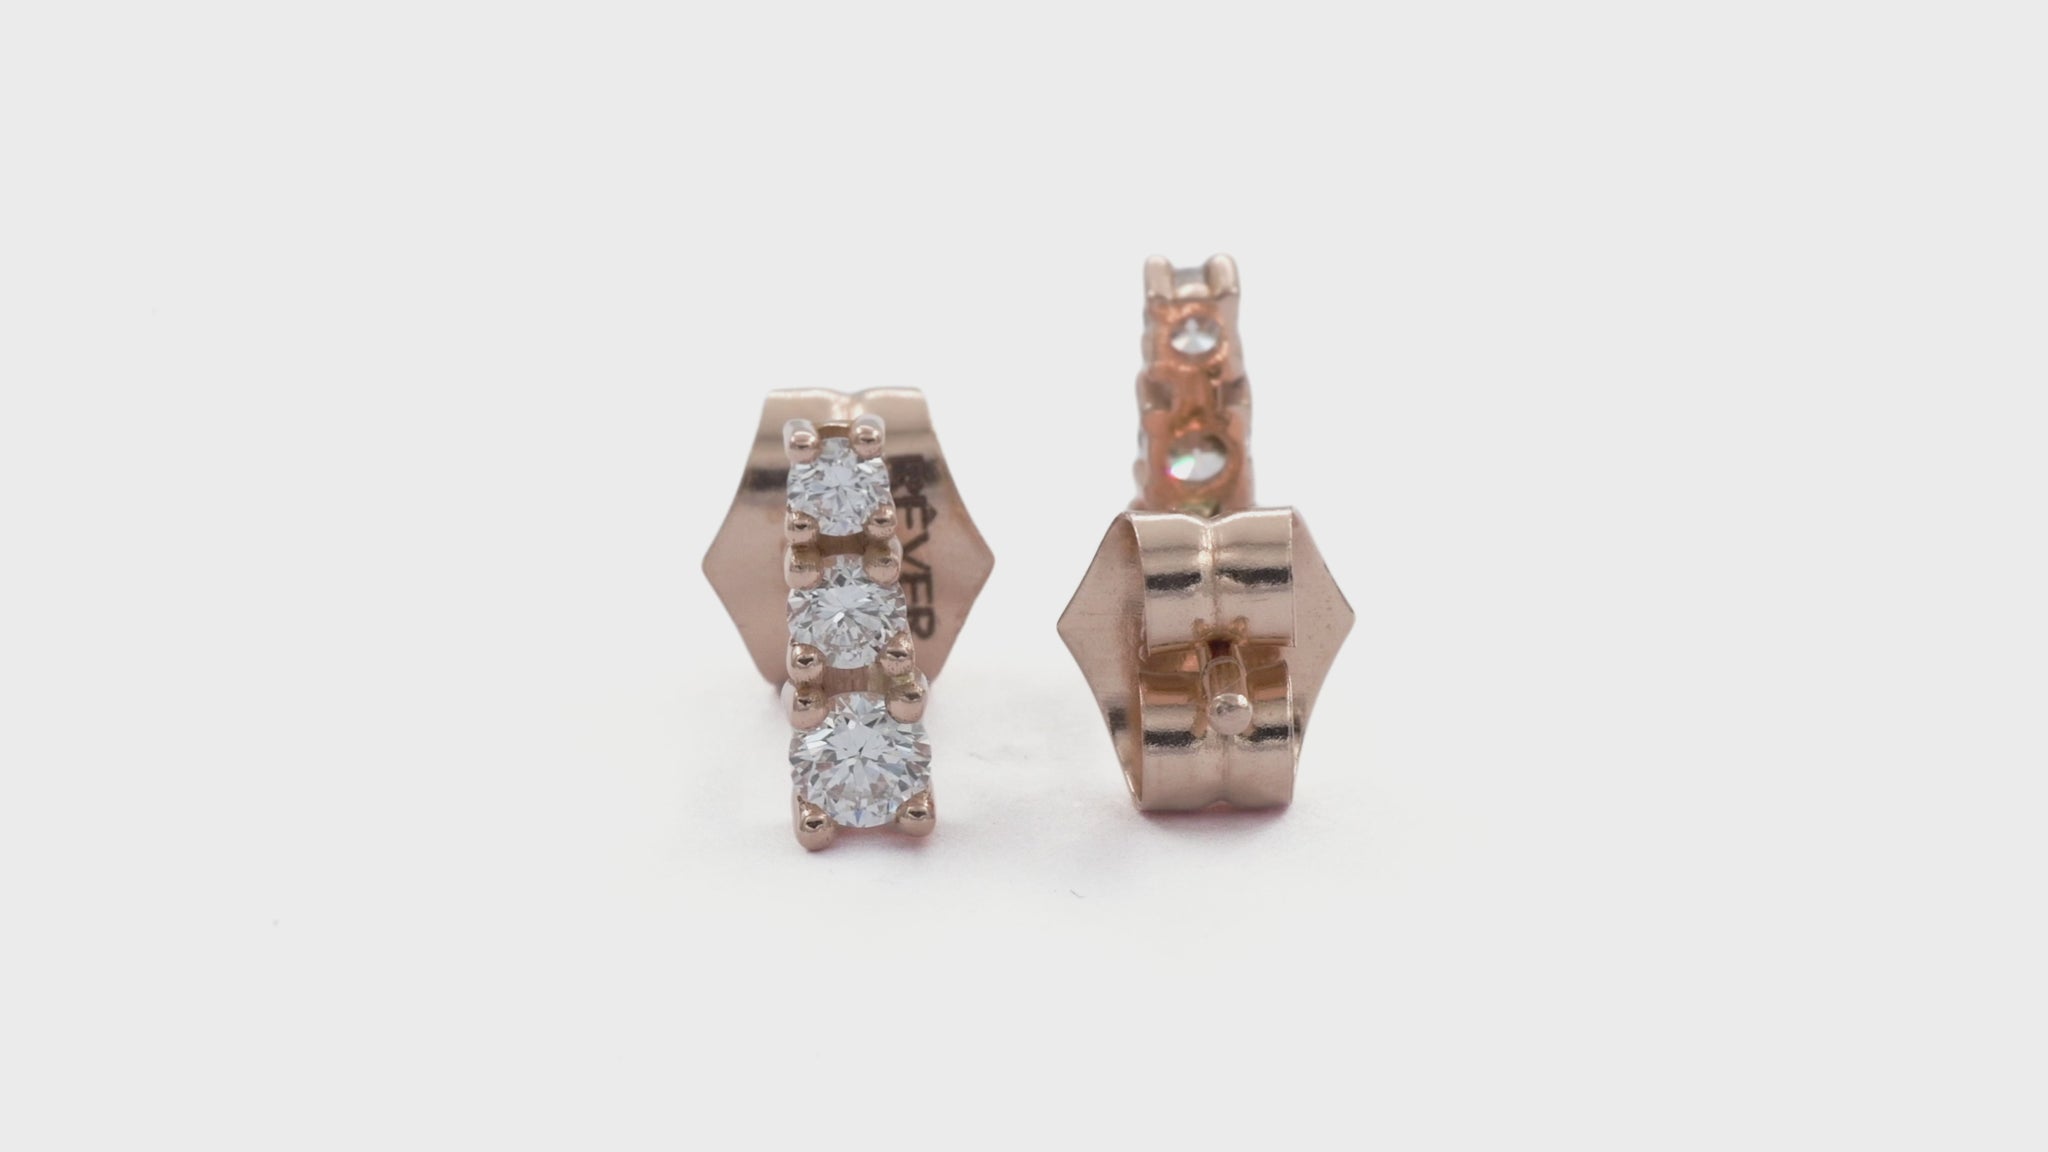 Degrade earrings - 18k recycled gold lab-grown diamond stud earrings - The Future Rocks